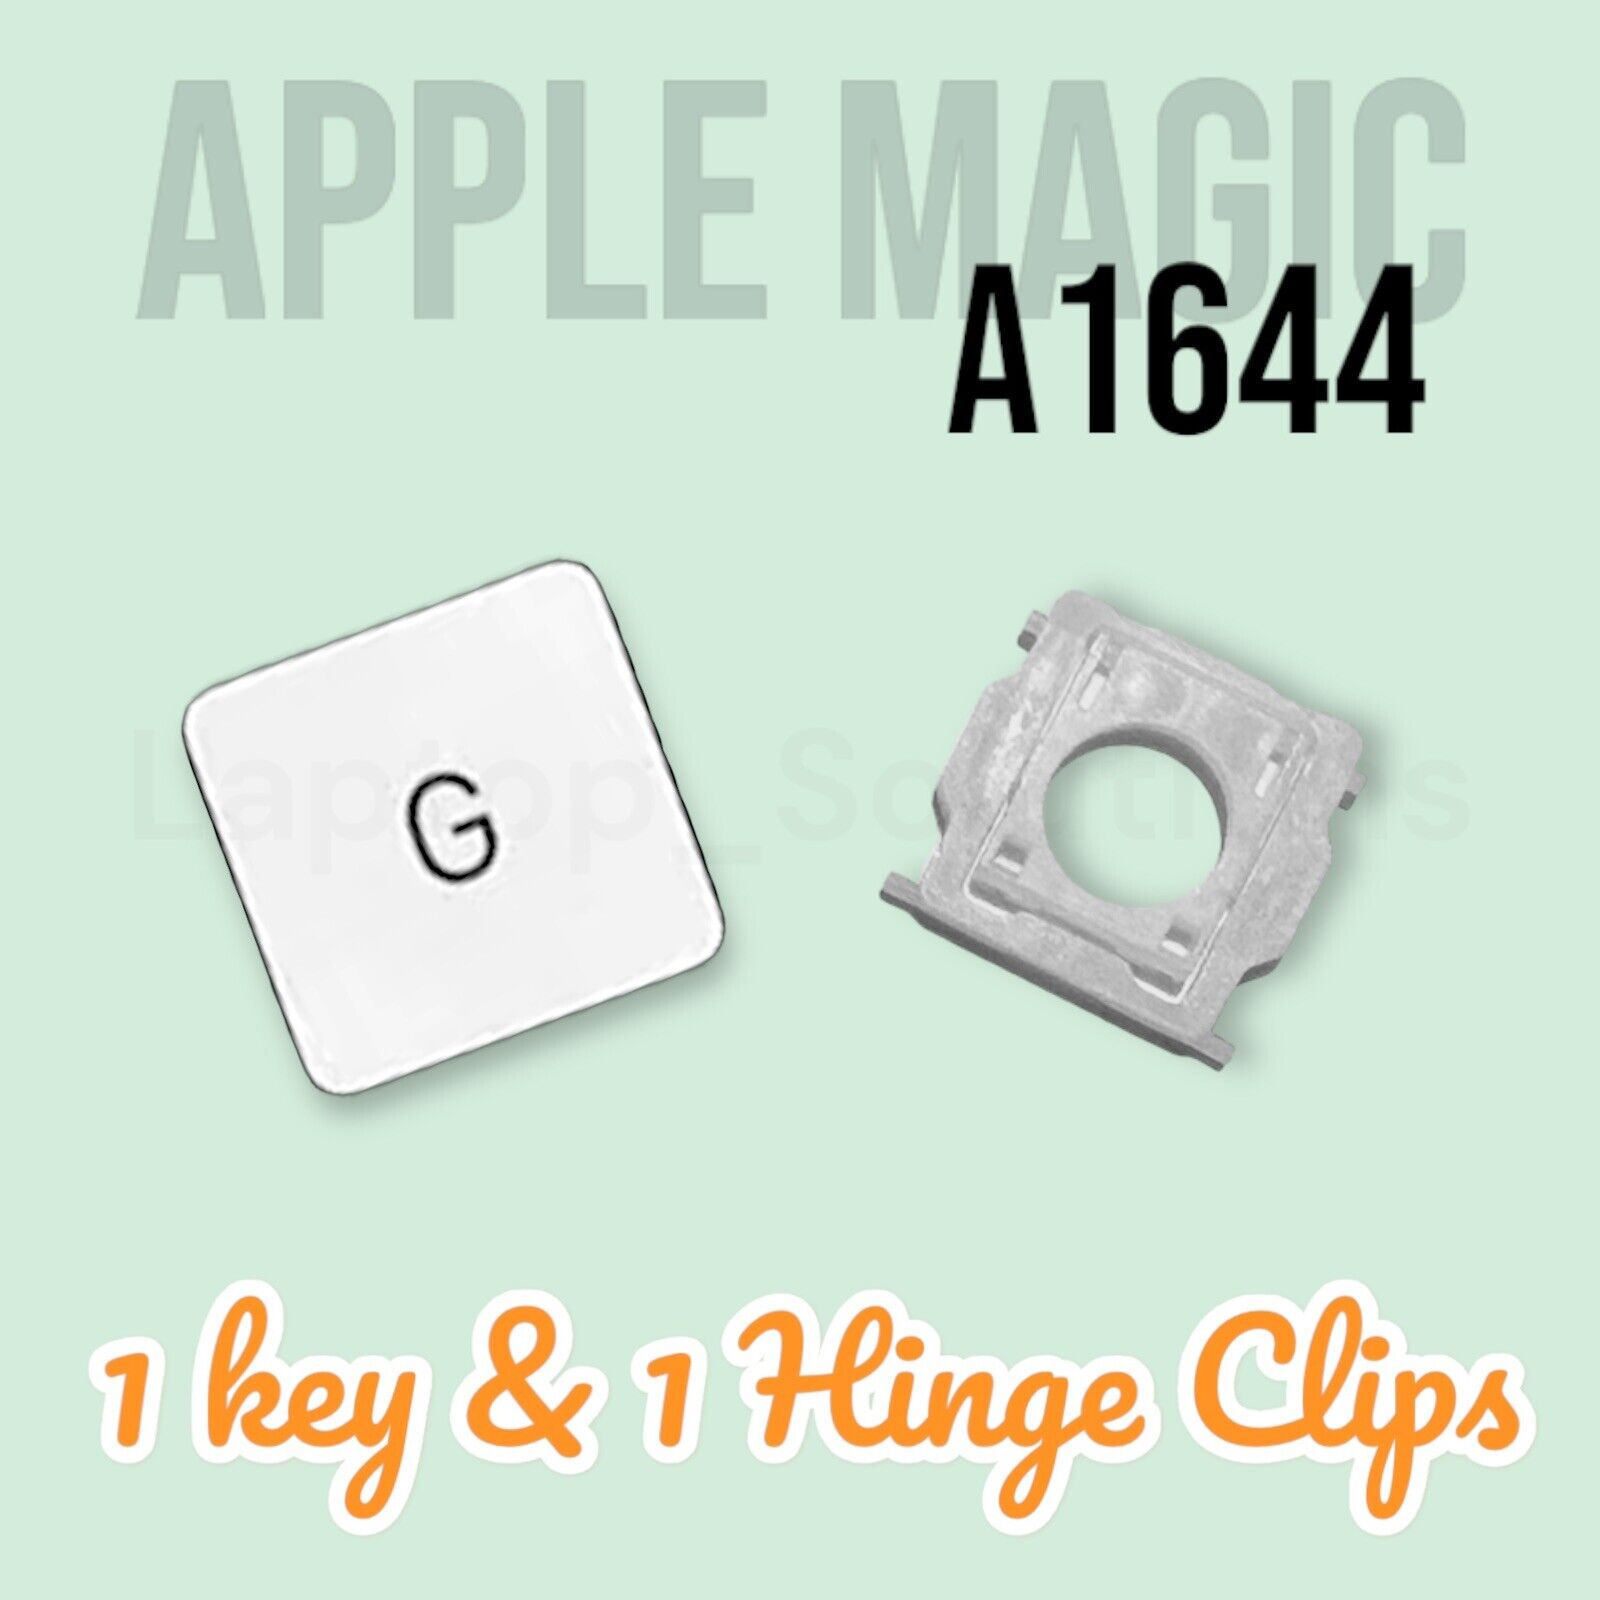 100% OEM Apple Magic Wireless 2 Keyboard Key Replacement A1644 1 Key Cap + Clip